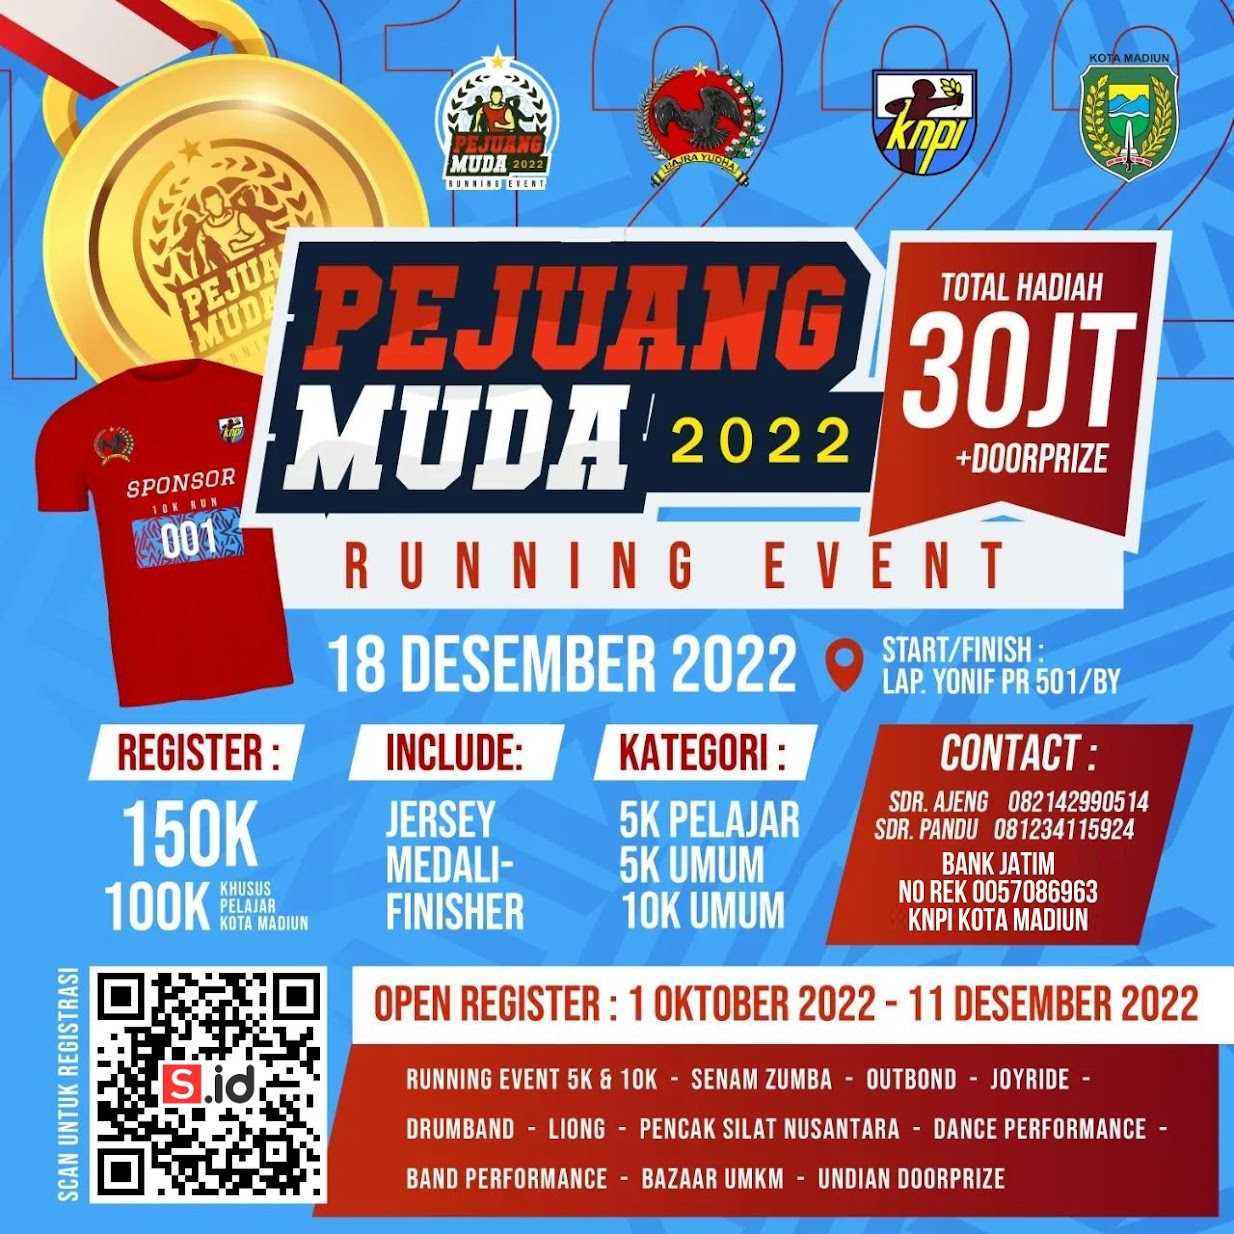 Pejuang Muda Running Event â€¢ 2022